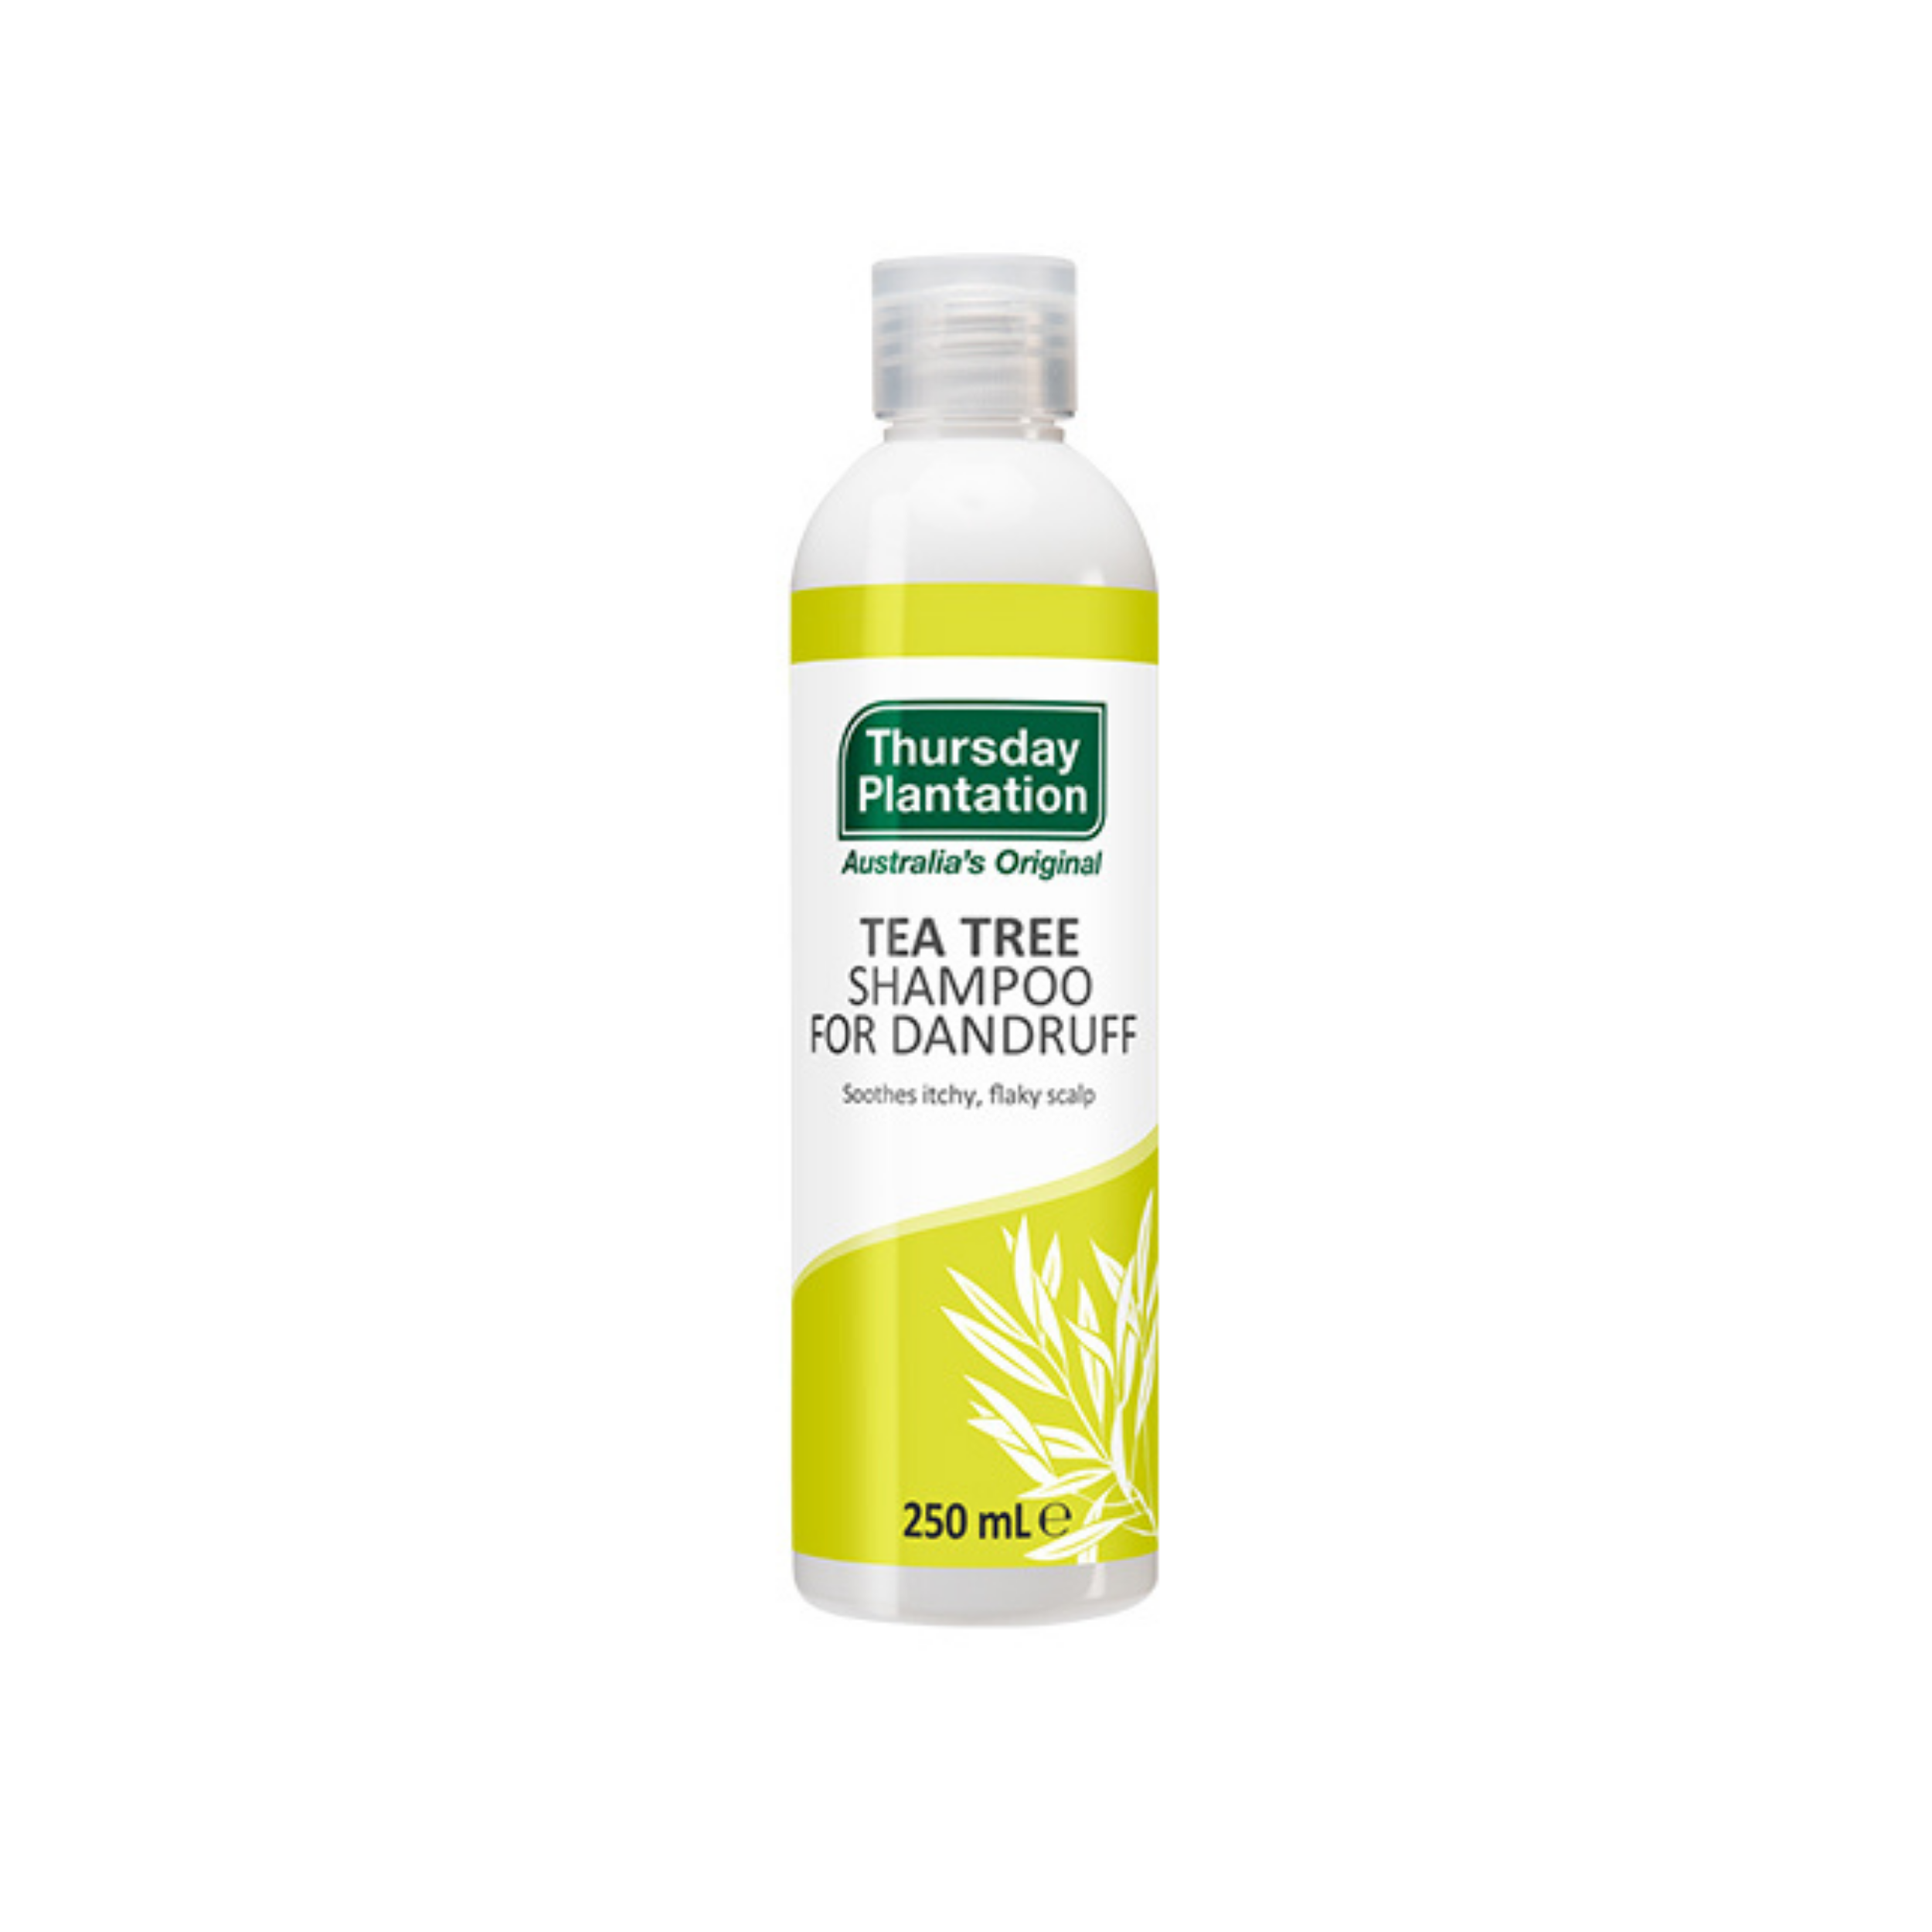 Tea Tree Shampoo For Dandruff 250ml